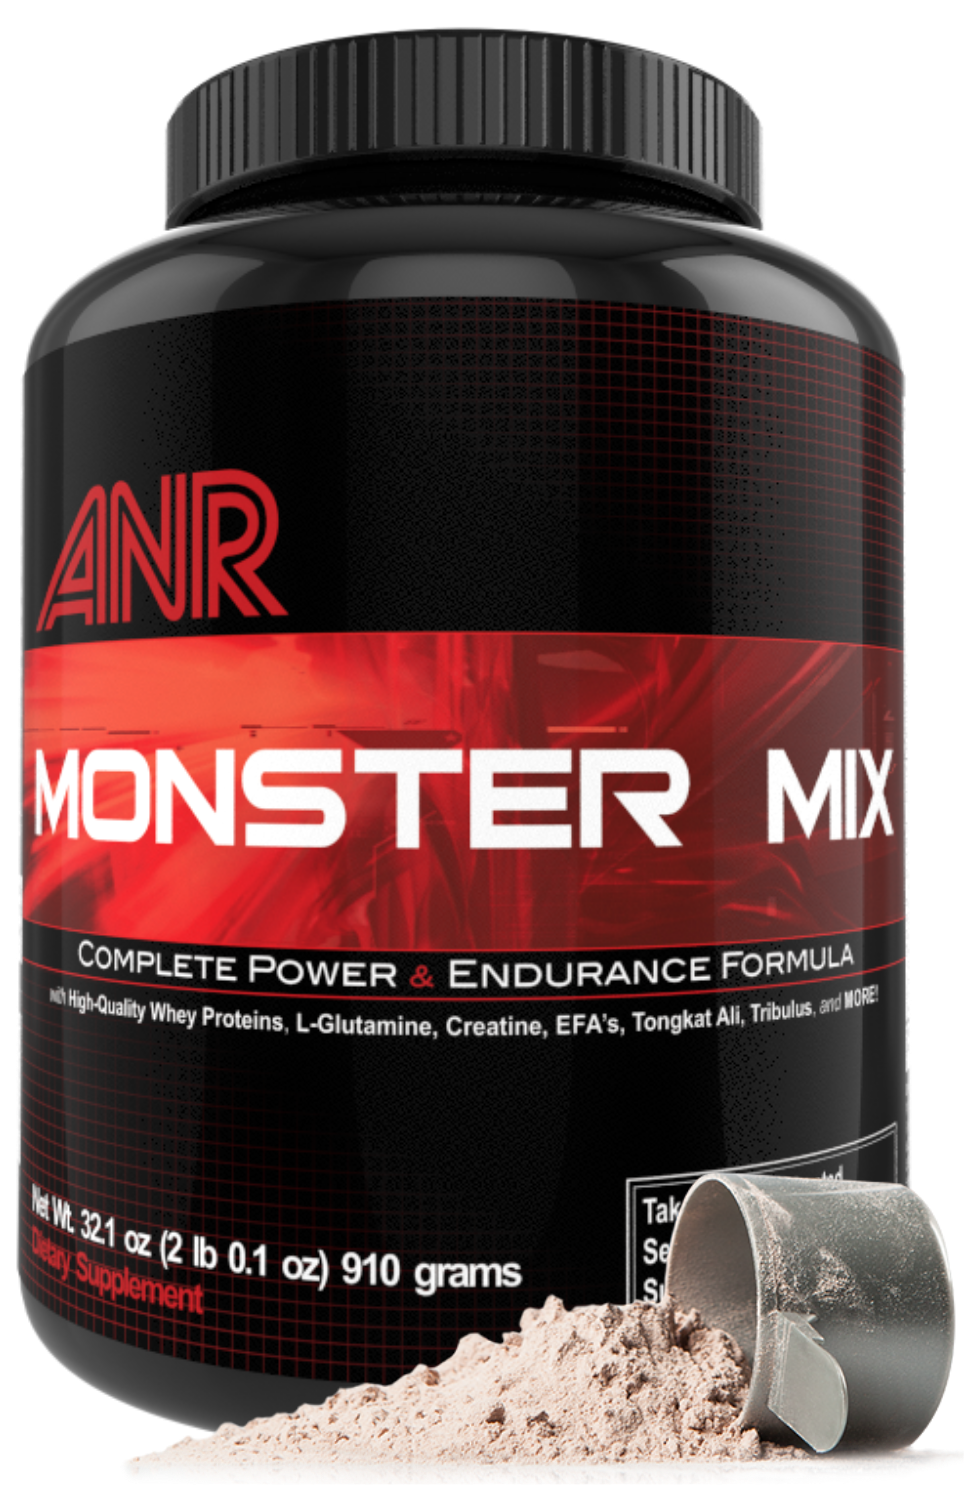 Monster Mix Ultimate Muscle-Building Formula - TeamANR